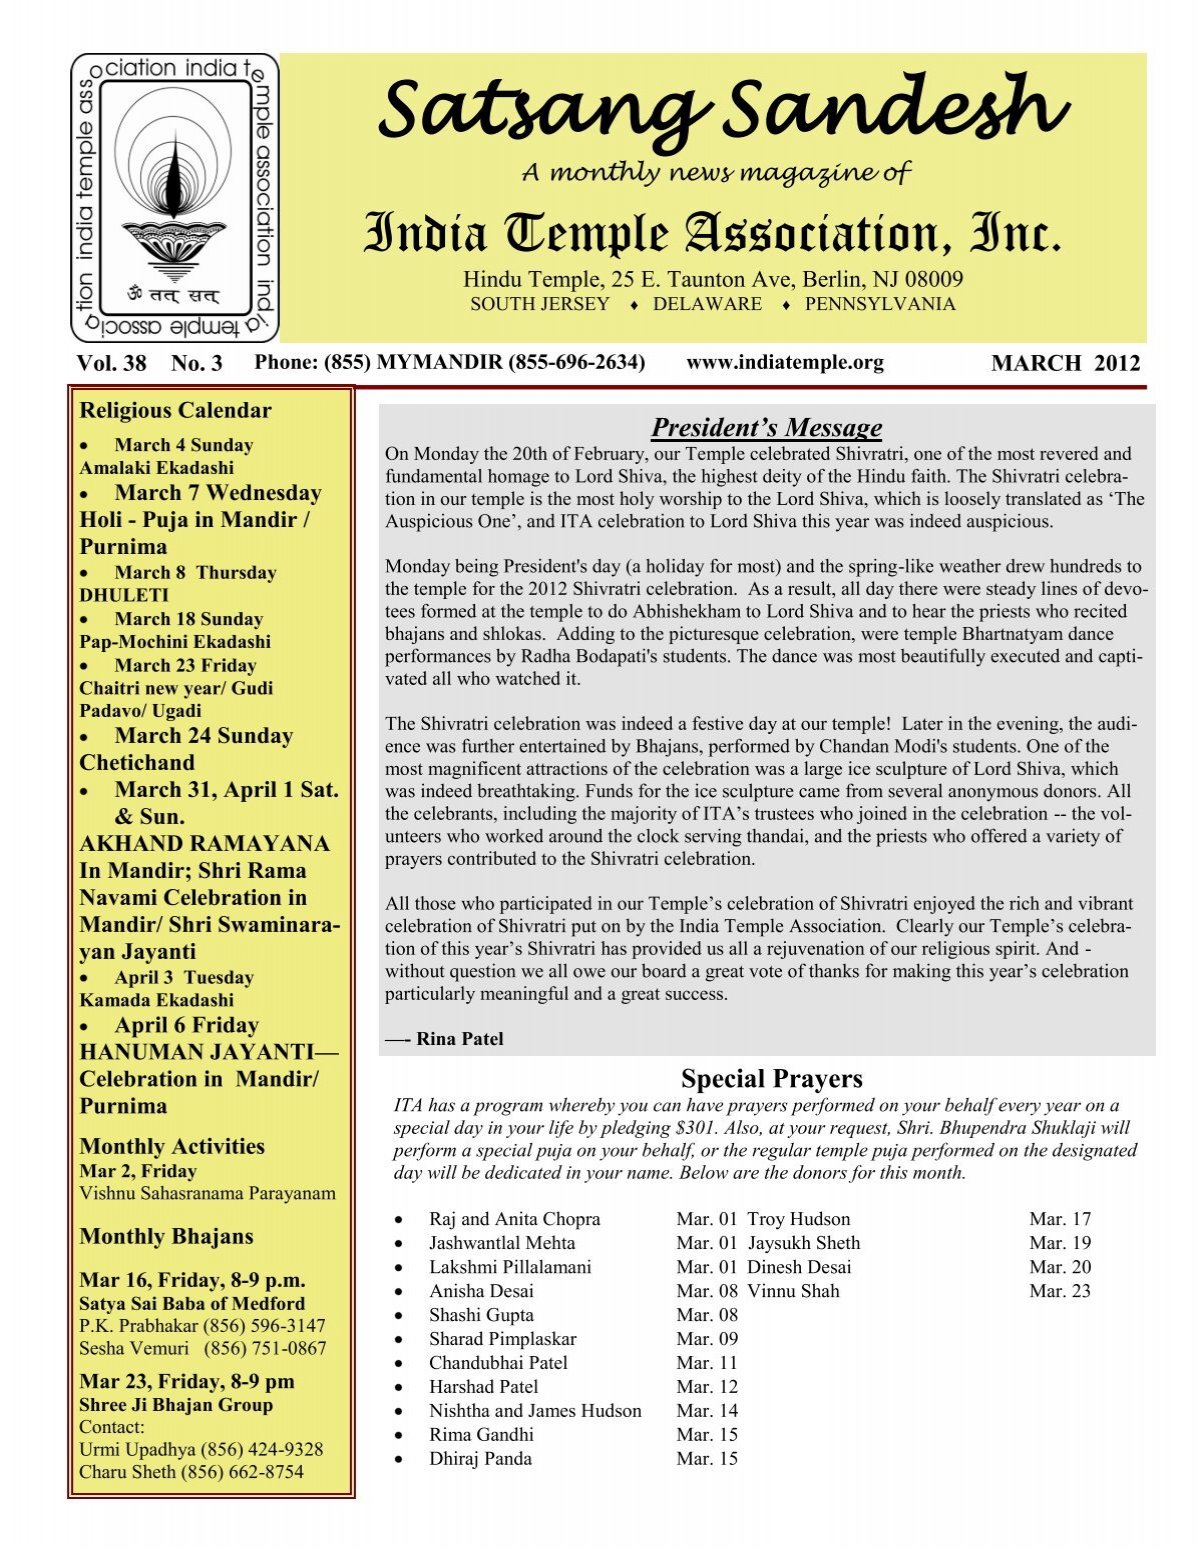 Sri Hanuman Jayanti India Temple Association